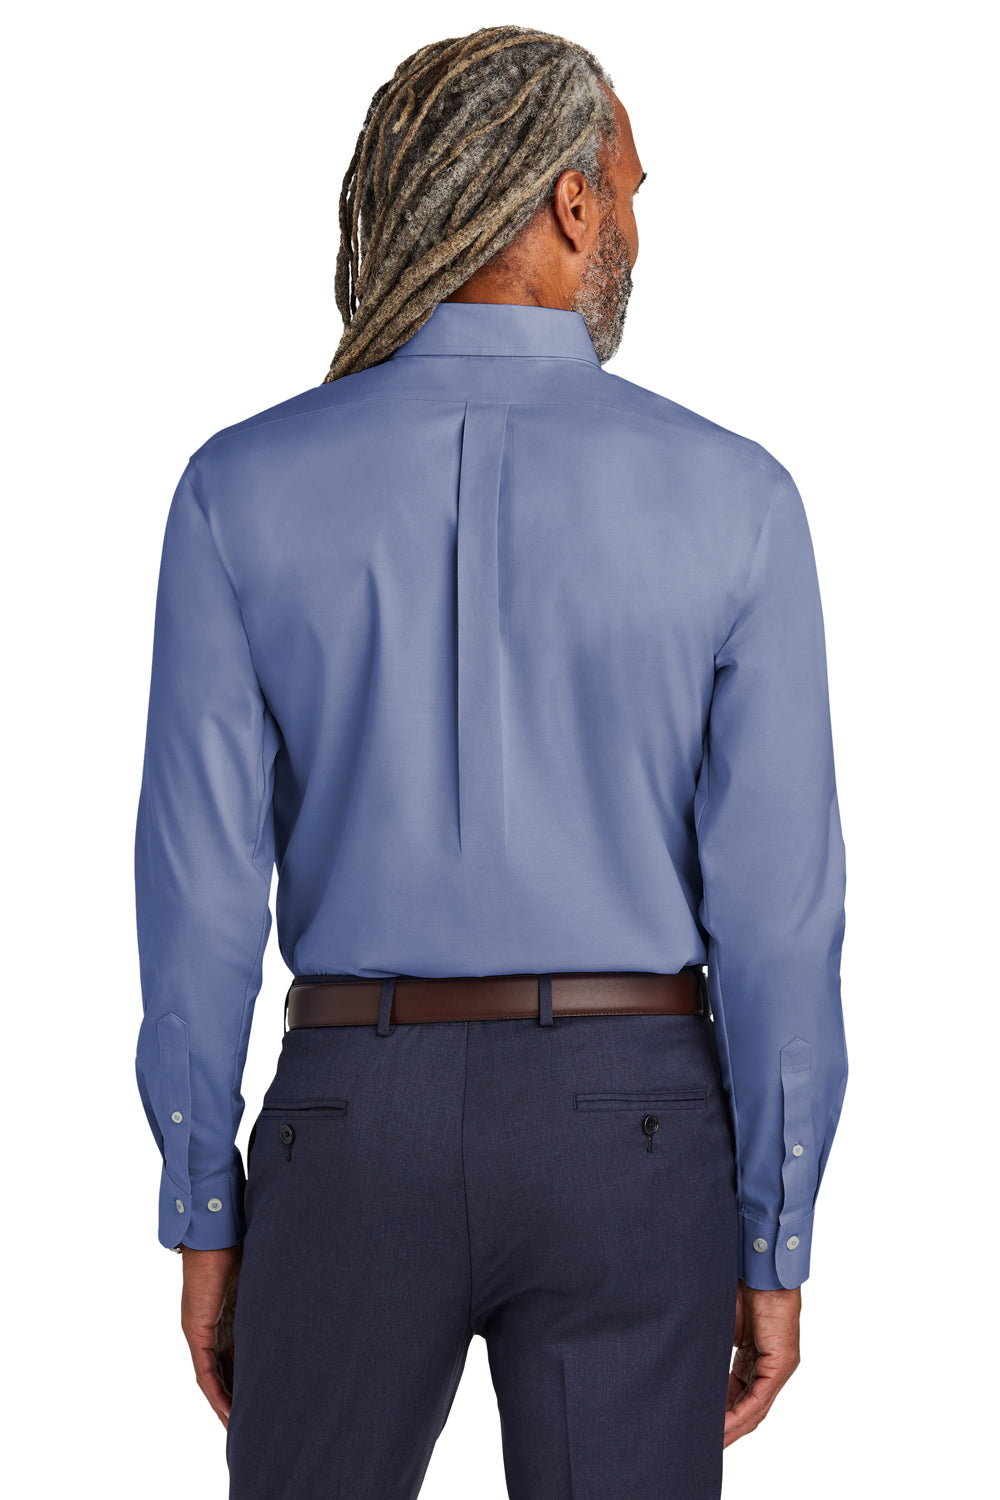 Brooks Brothers Mens Wrinkle Resistant Pinpoint Long Sleeve Button Down Shirt w/ Pocket Cobalt Blue Model Back